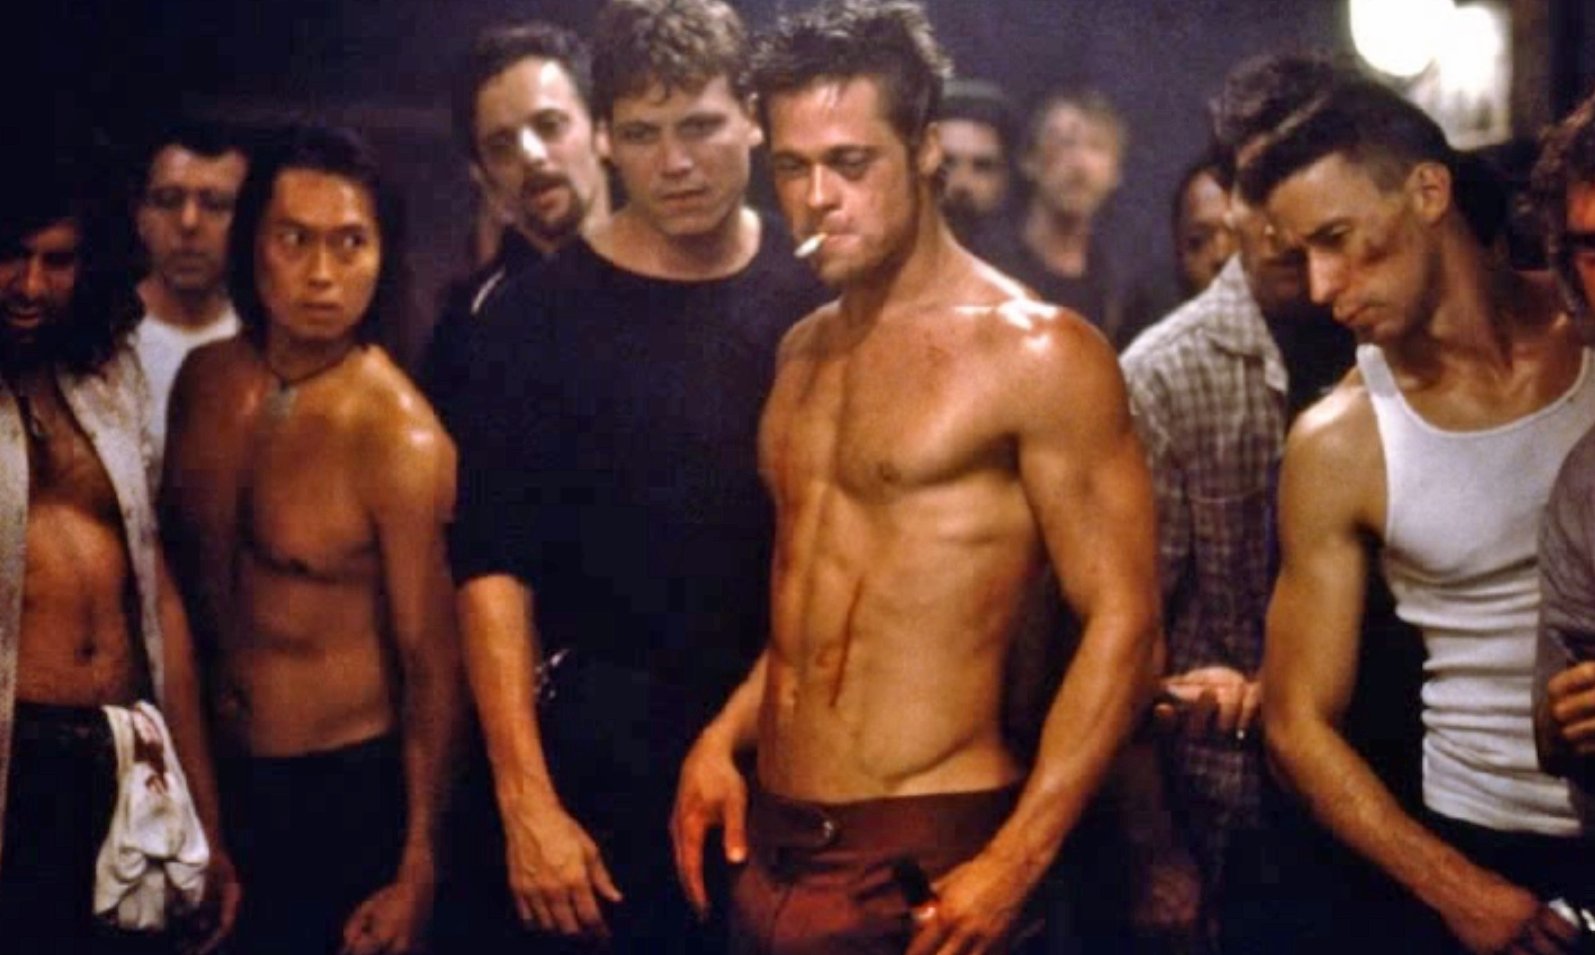 The 10 Best Brad Pitt Movies - A List by ComingSoon.net